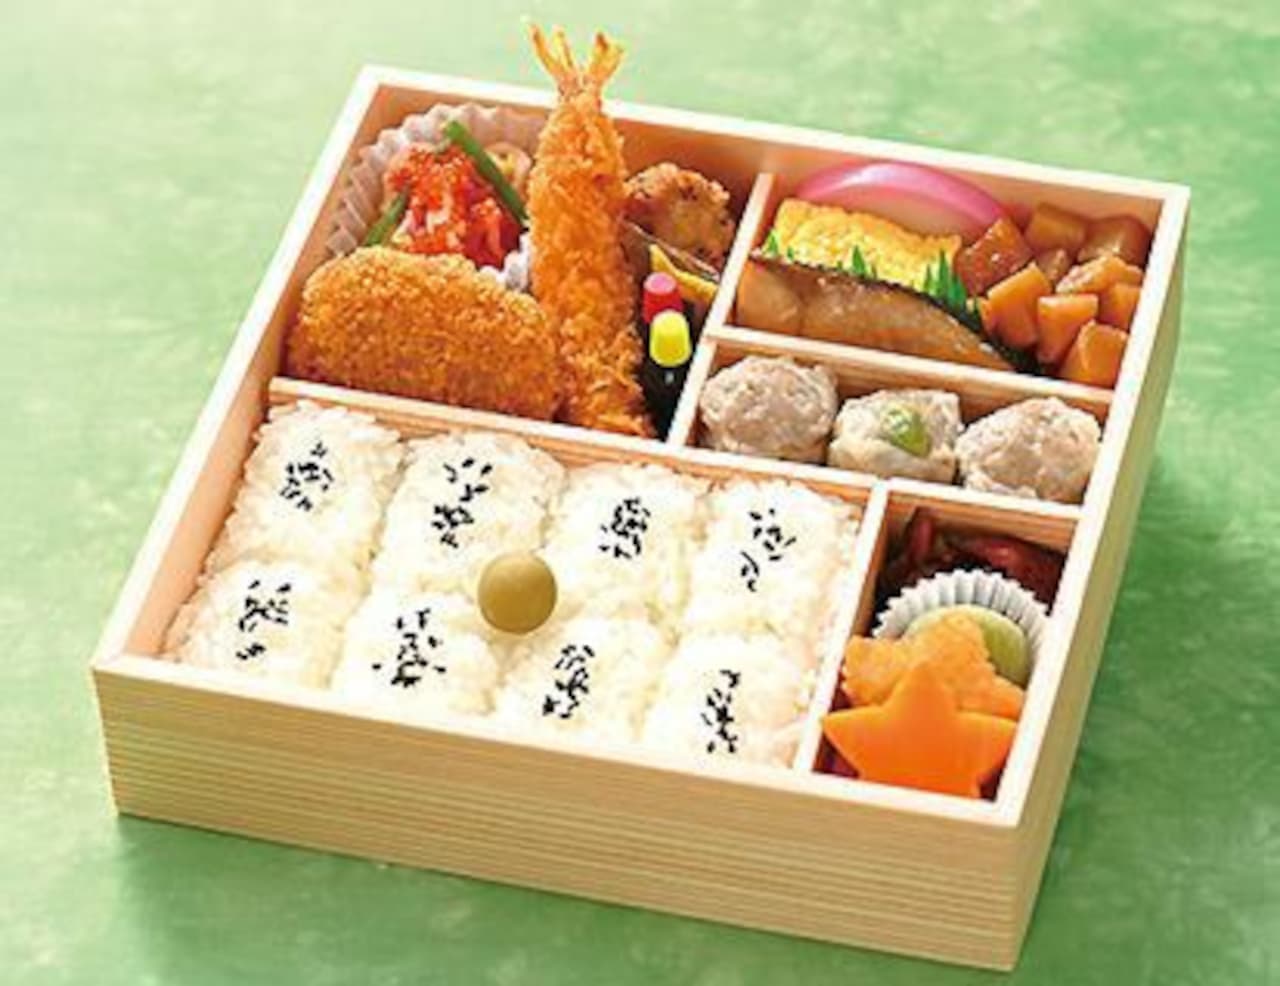 "New ☆ Hamasta Support Lunch Box" from Kiyoken